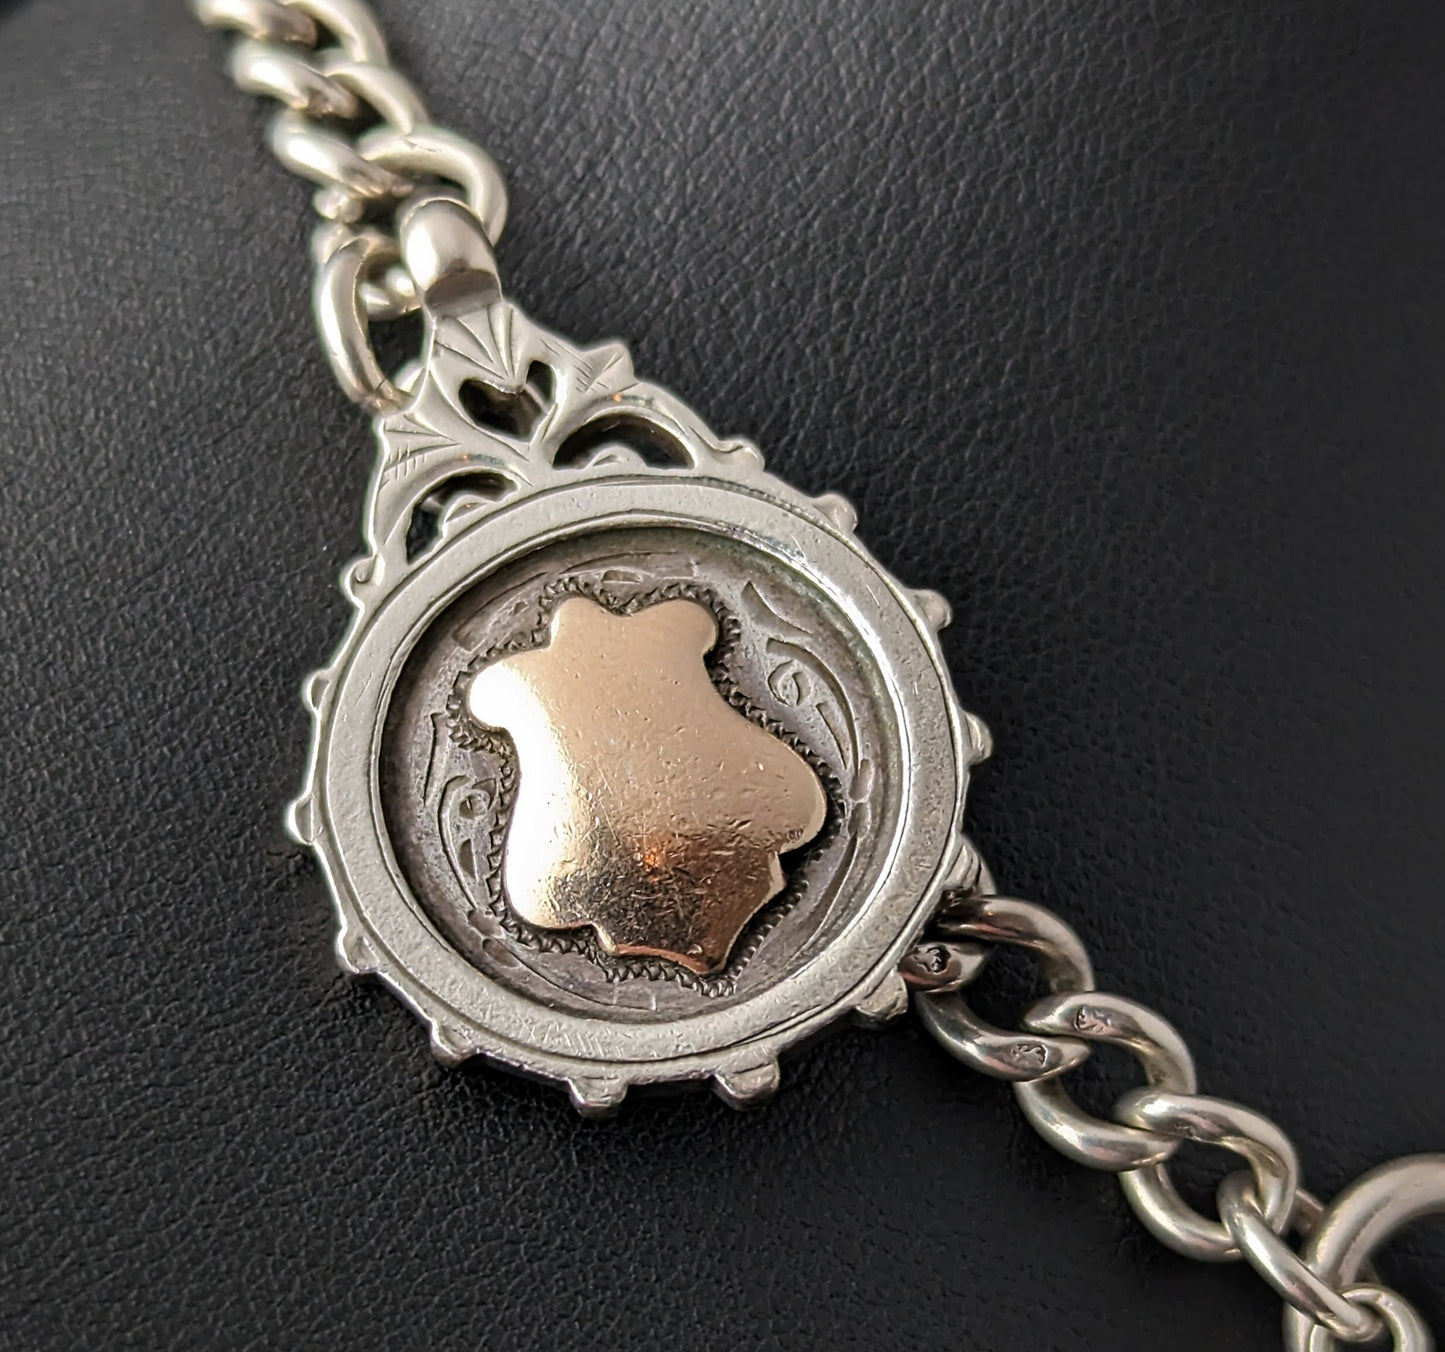 Antique sterling silver Albert chain, tassel, watch chain fob